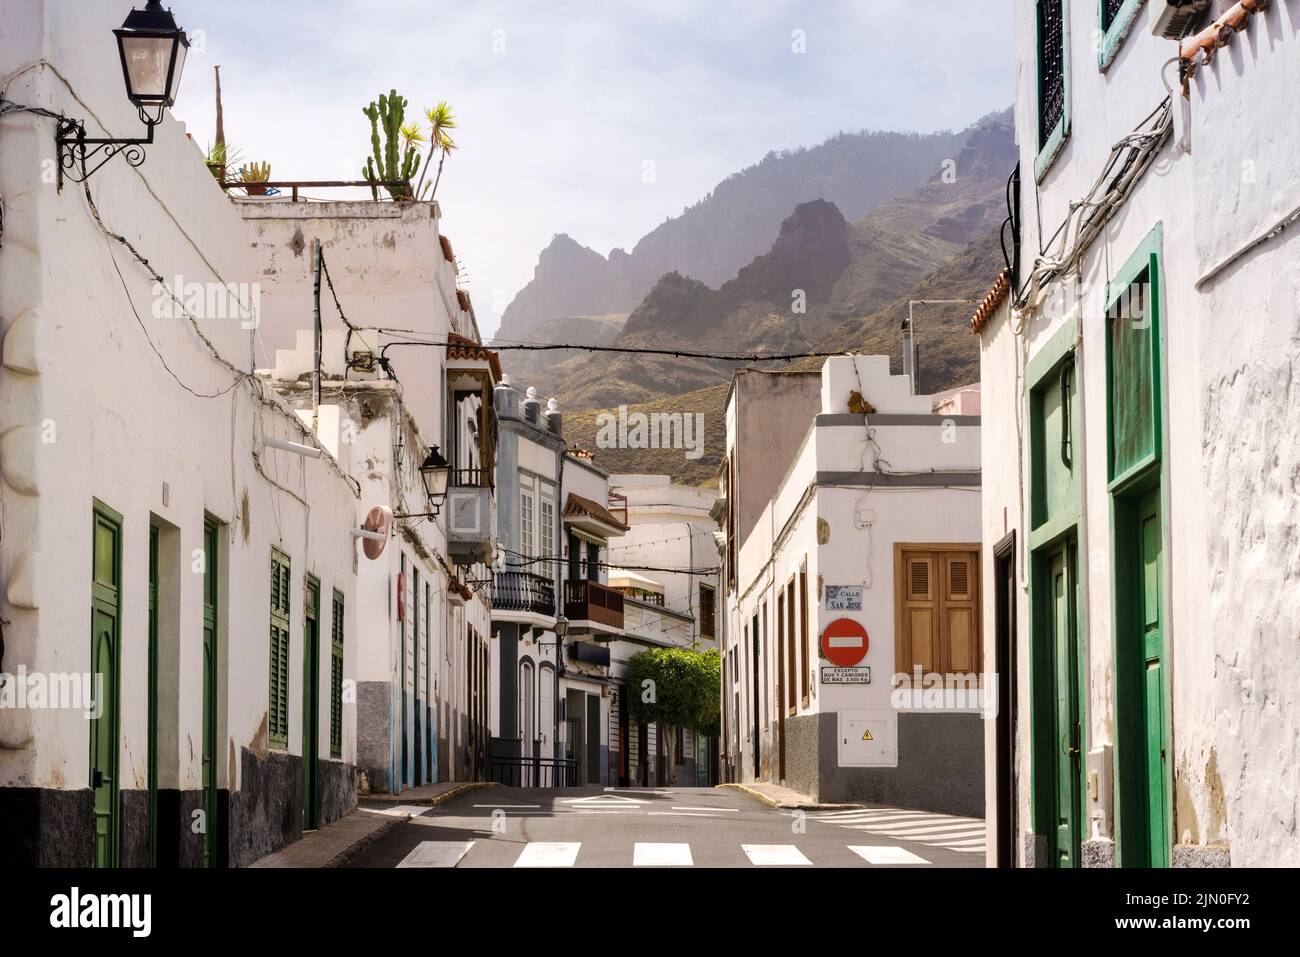 The town of agaete fotografías e imágenes de alta resolución - Alamy